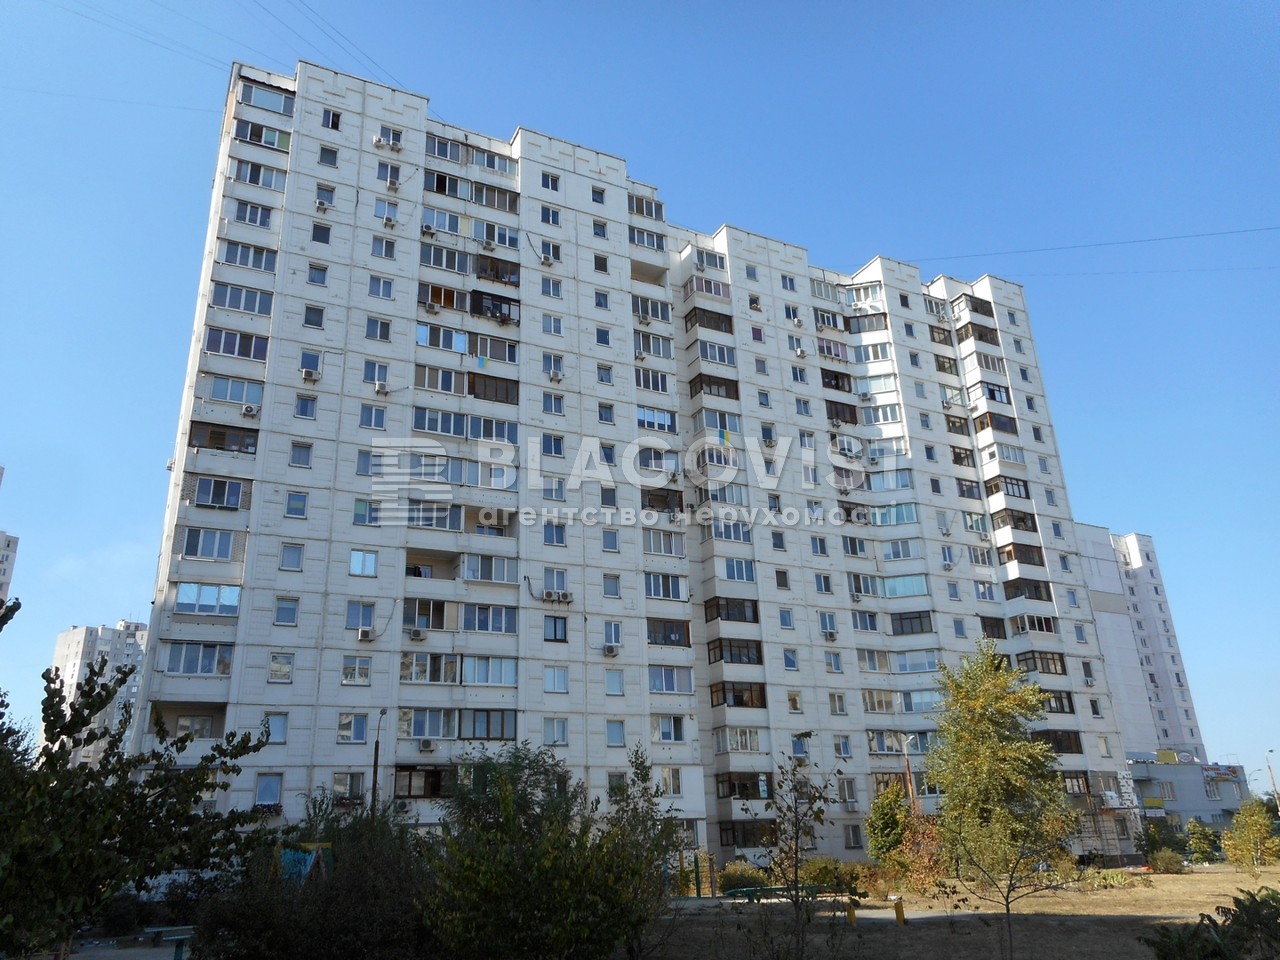 Квартира D-39844, Радунская, 11, Киев - Фото 2